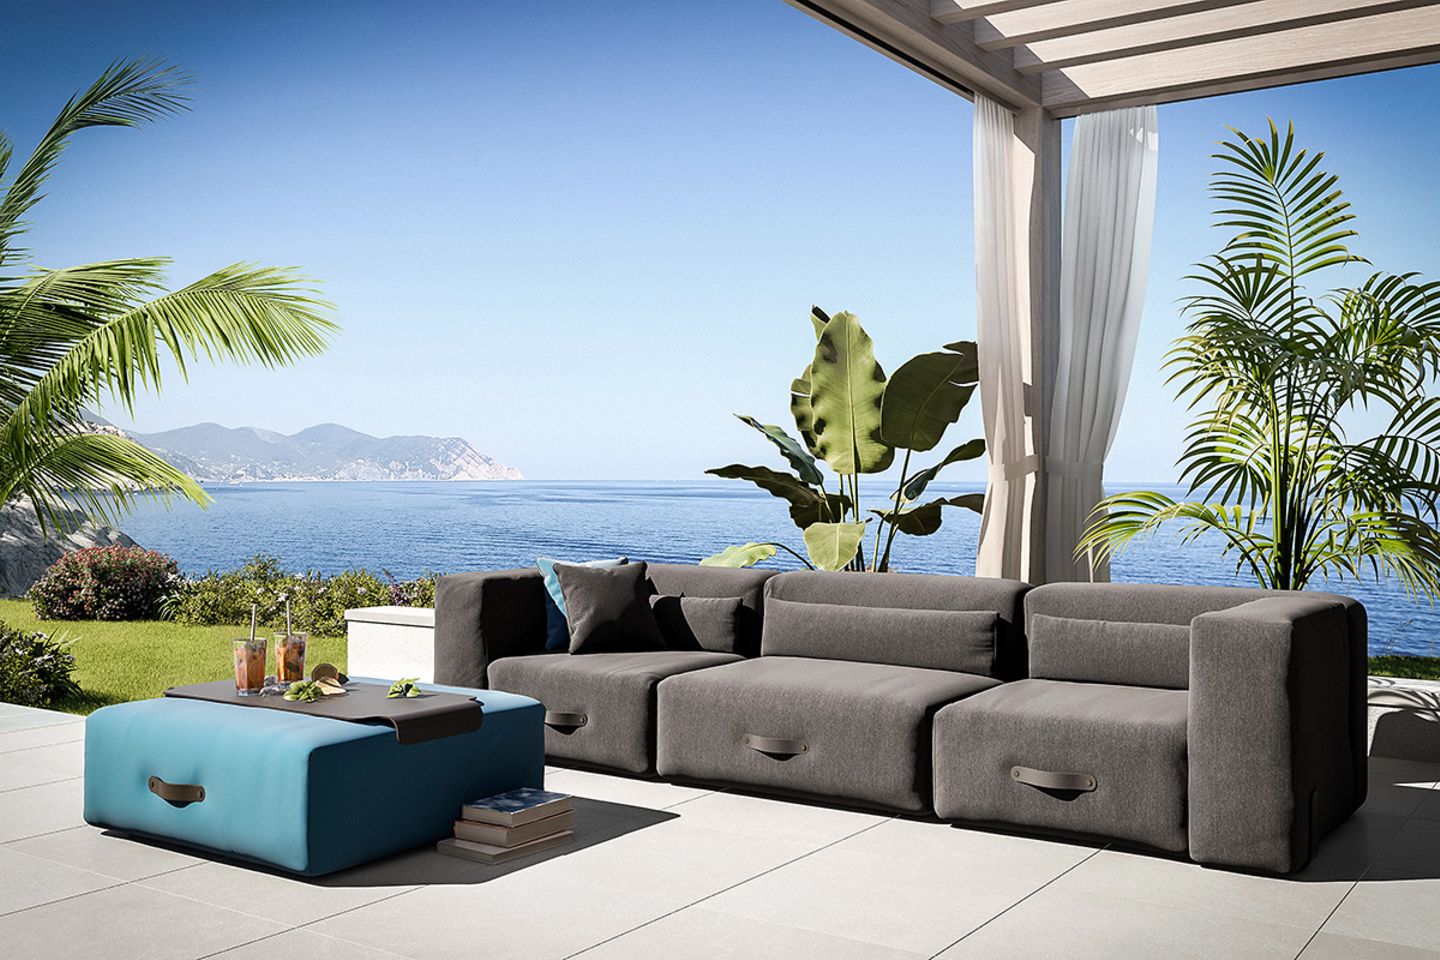 Outdoor-Sofa "Miami" von Conmoto